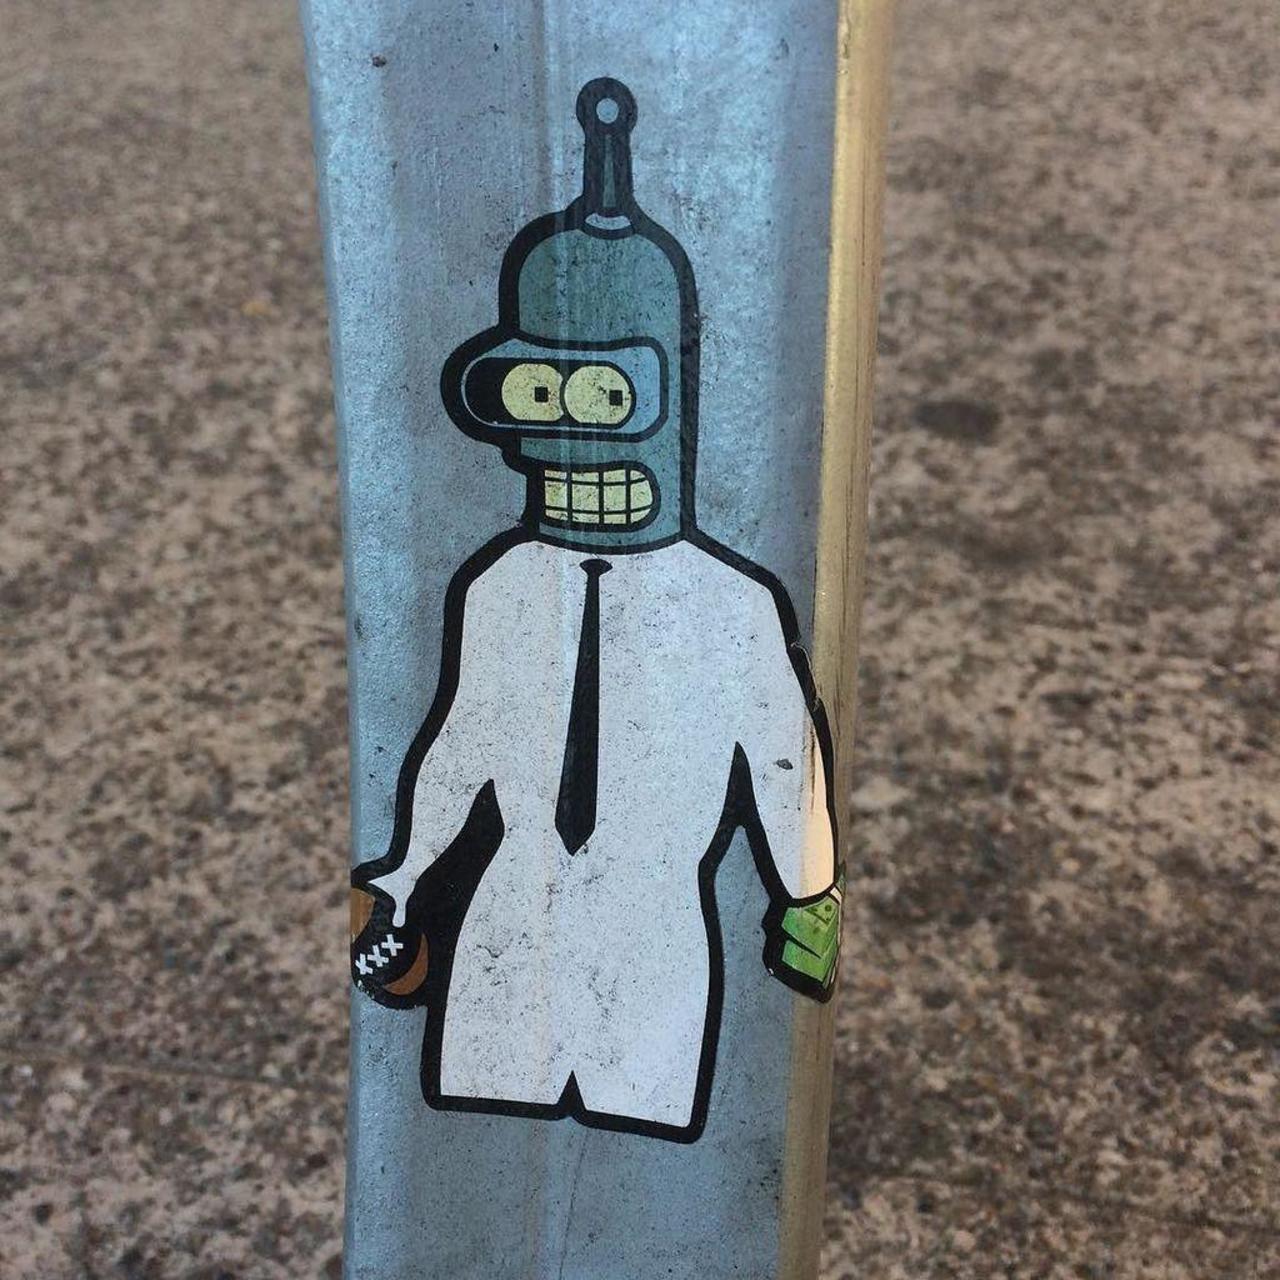 RT @StArtEverywhere: #Art #Graffiti #UrbanArt #StreetArtSF #StreetArt #SanFrancisco #BayArea #California #MrOmnomnom #Bender #Futurama #… http://t.co/ul3lirLwn1